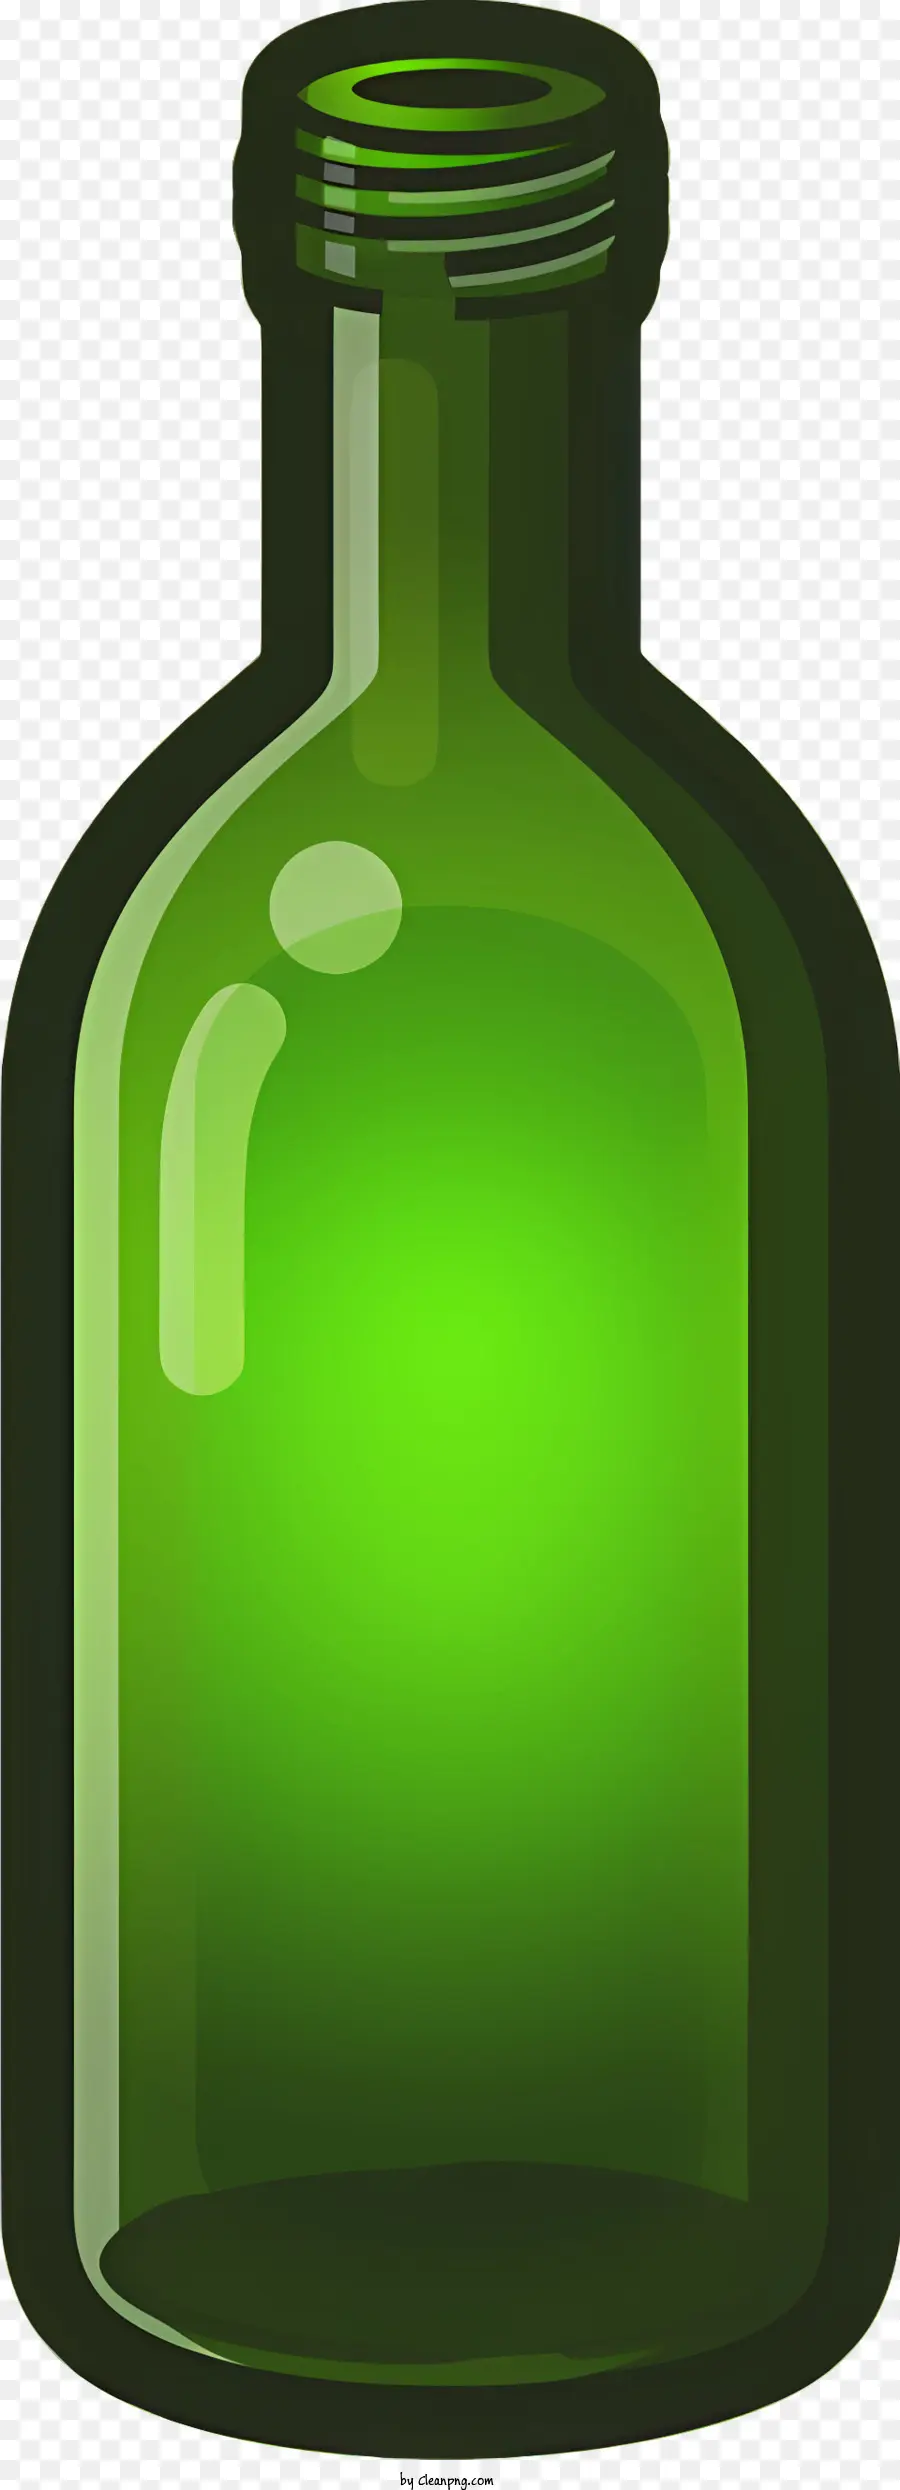 icon green bottle clear glass bottle round bottom bottle rounded neck bottle